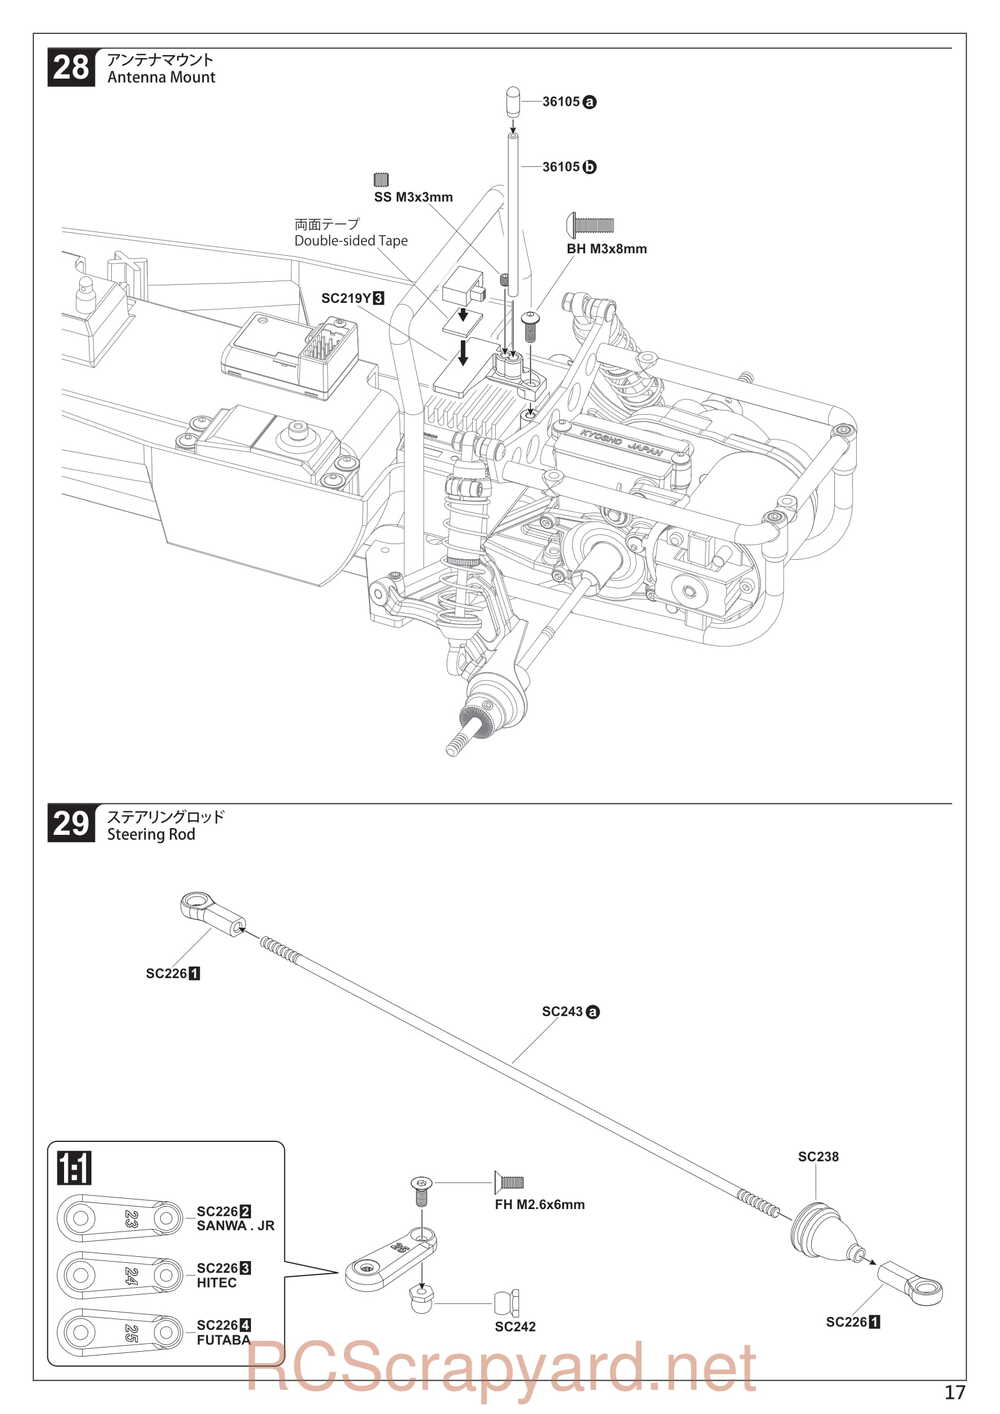 Kyosho - 30613 - Scorpion 2014 - Manual - Page 17